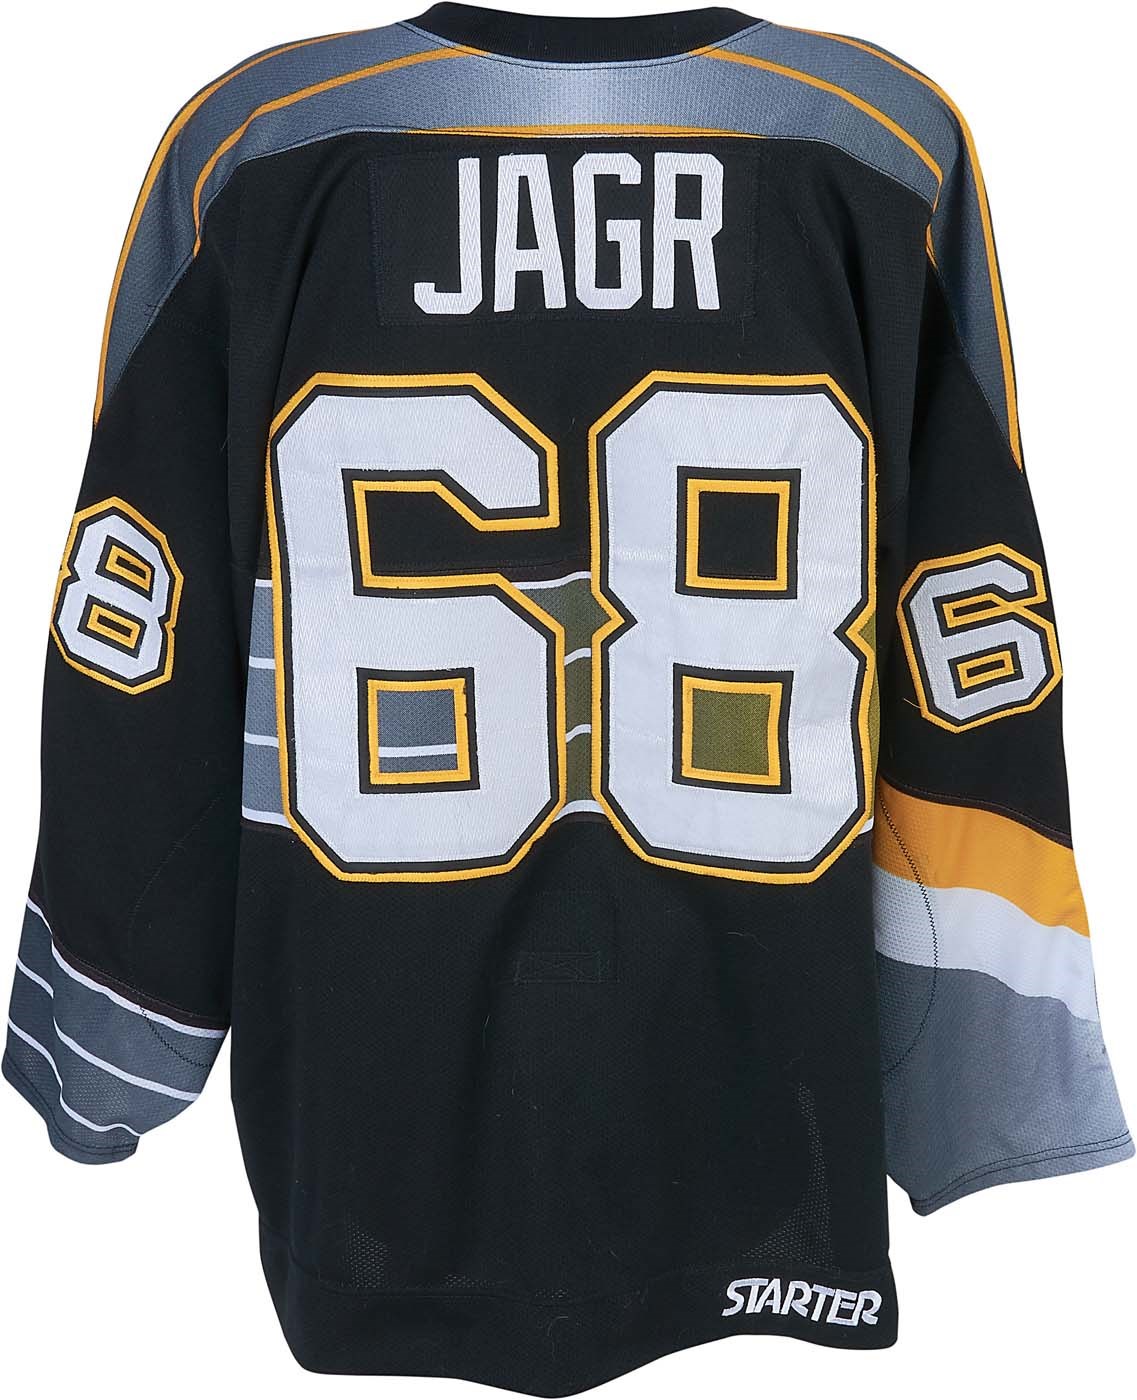 - 1997-98 Jaromir Jagr Pittsburgh Penguins Game Worn Jersey